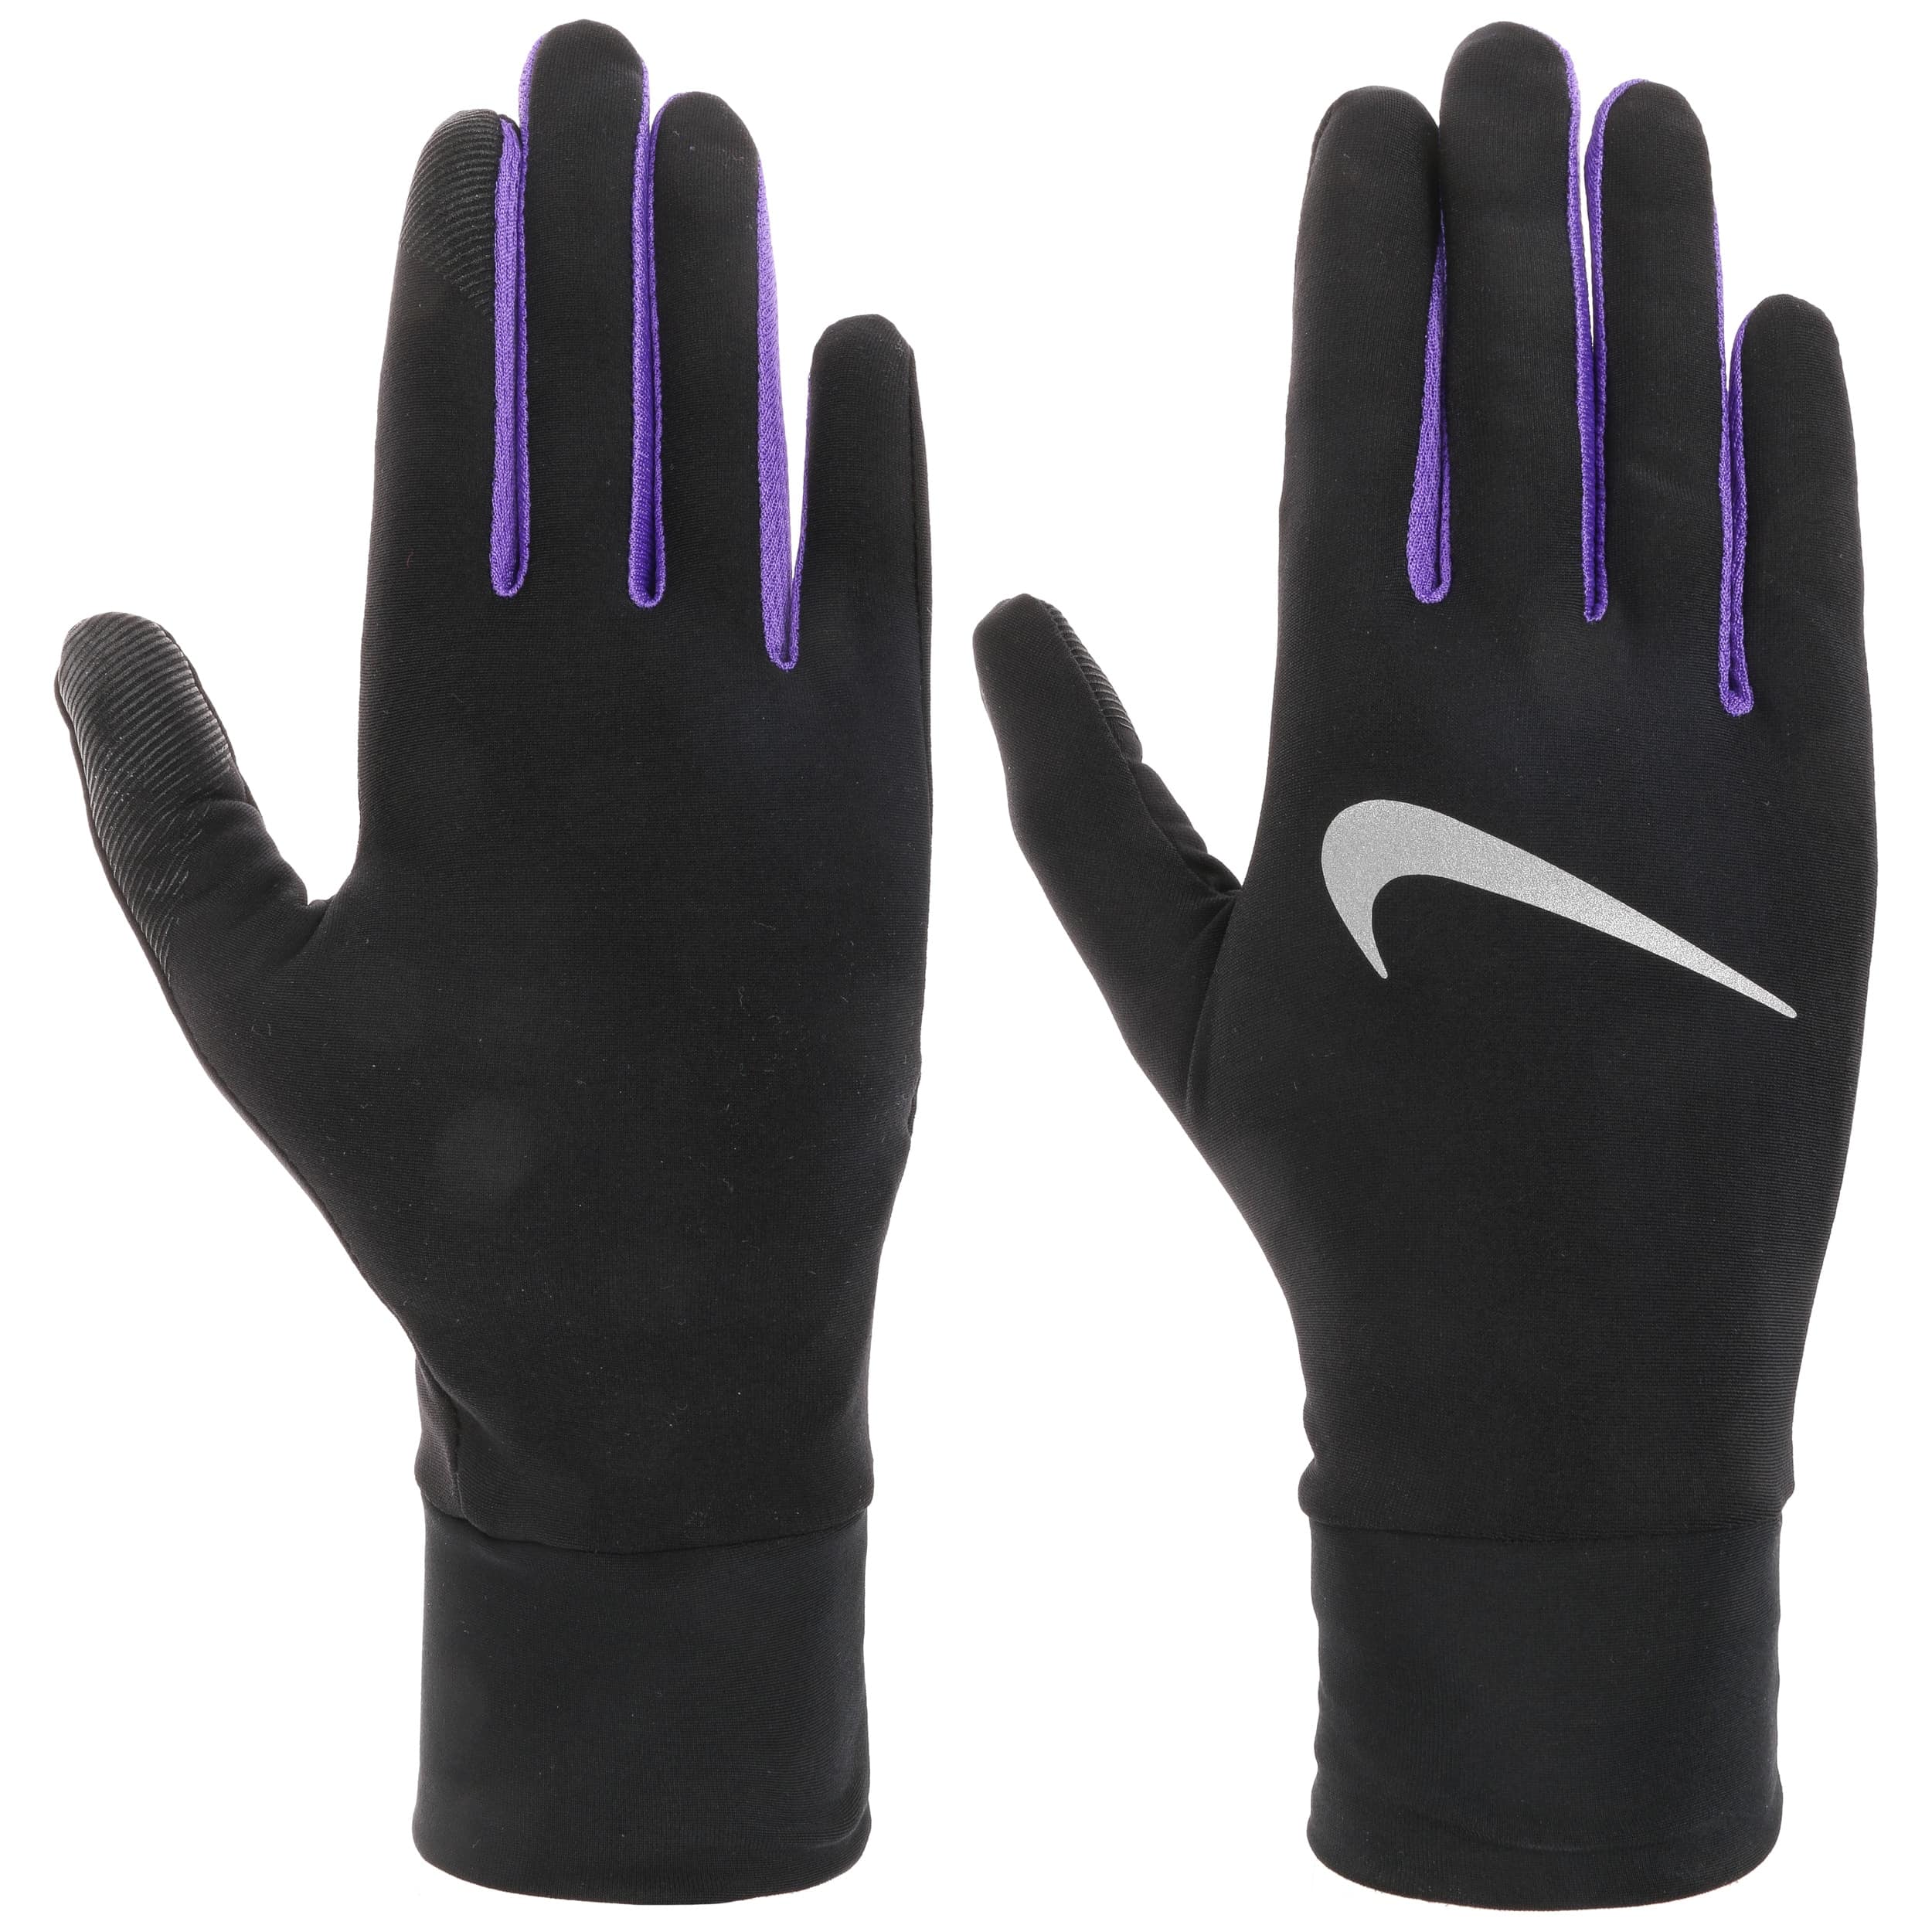 guantes nike negro